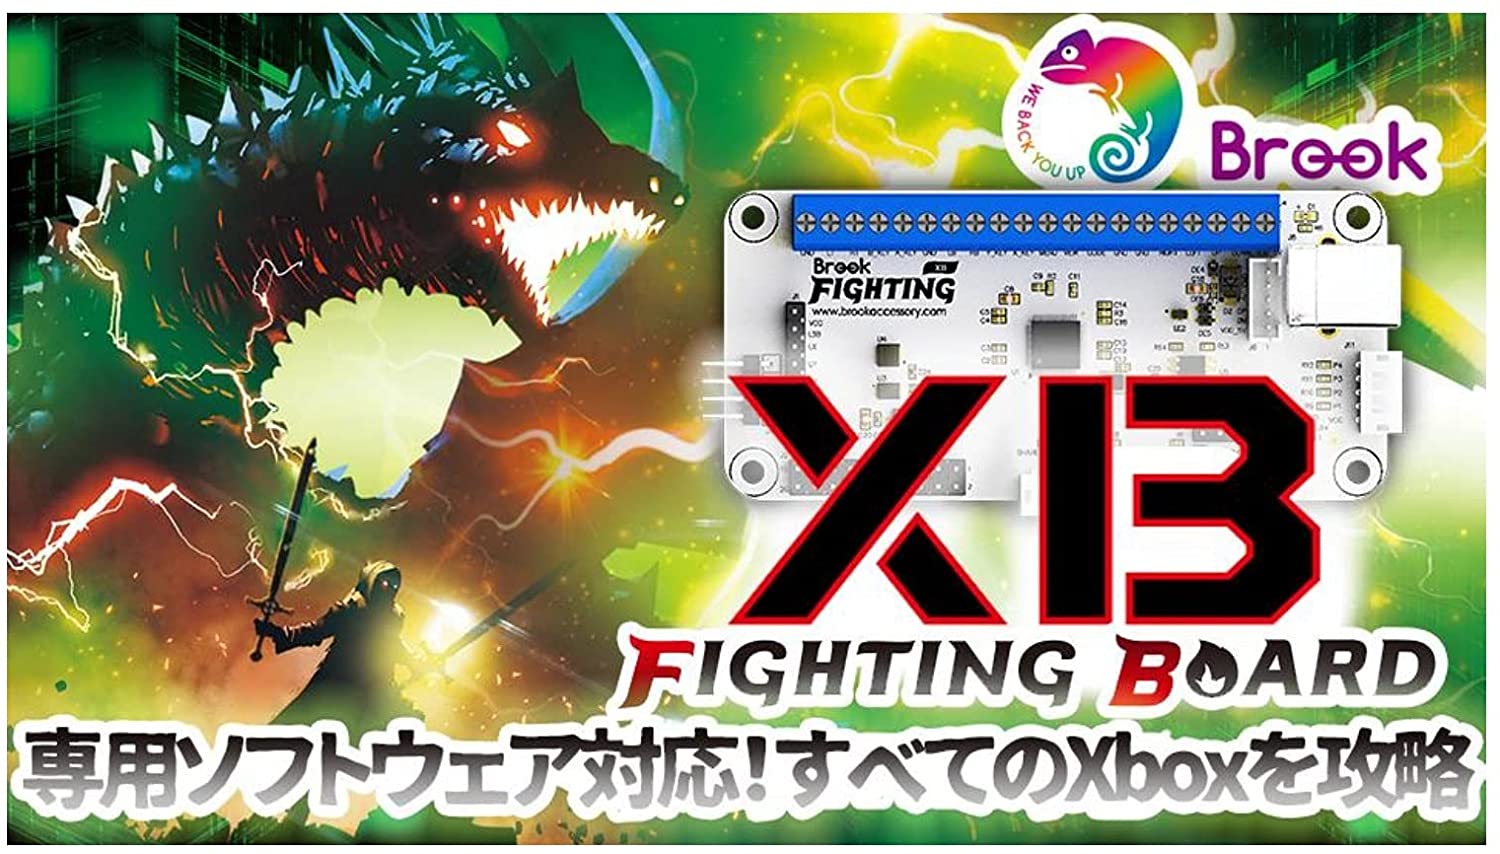 Brook XB FIGHTING BOARD - Gamebank-web.com